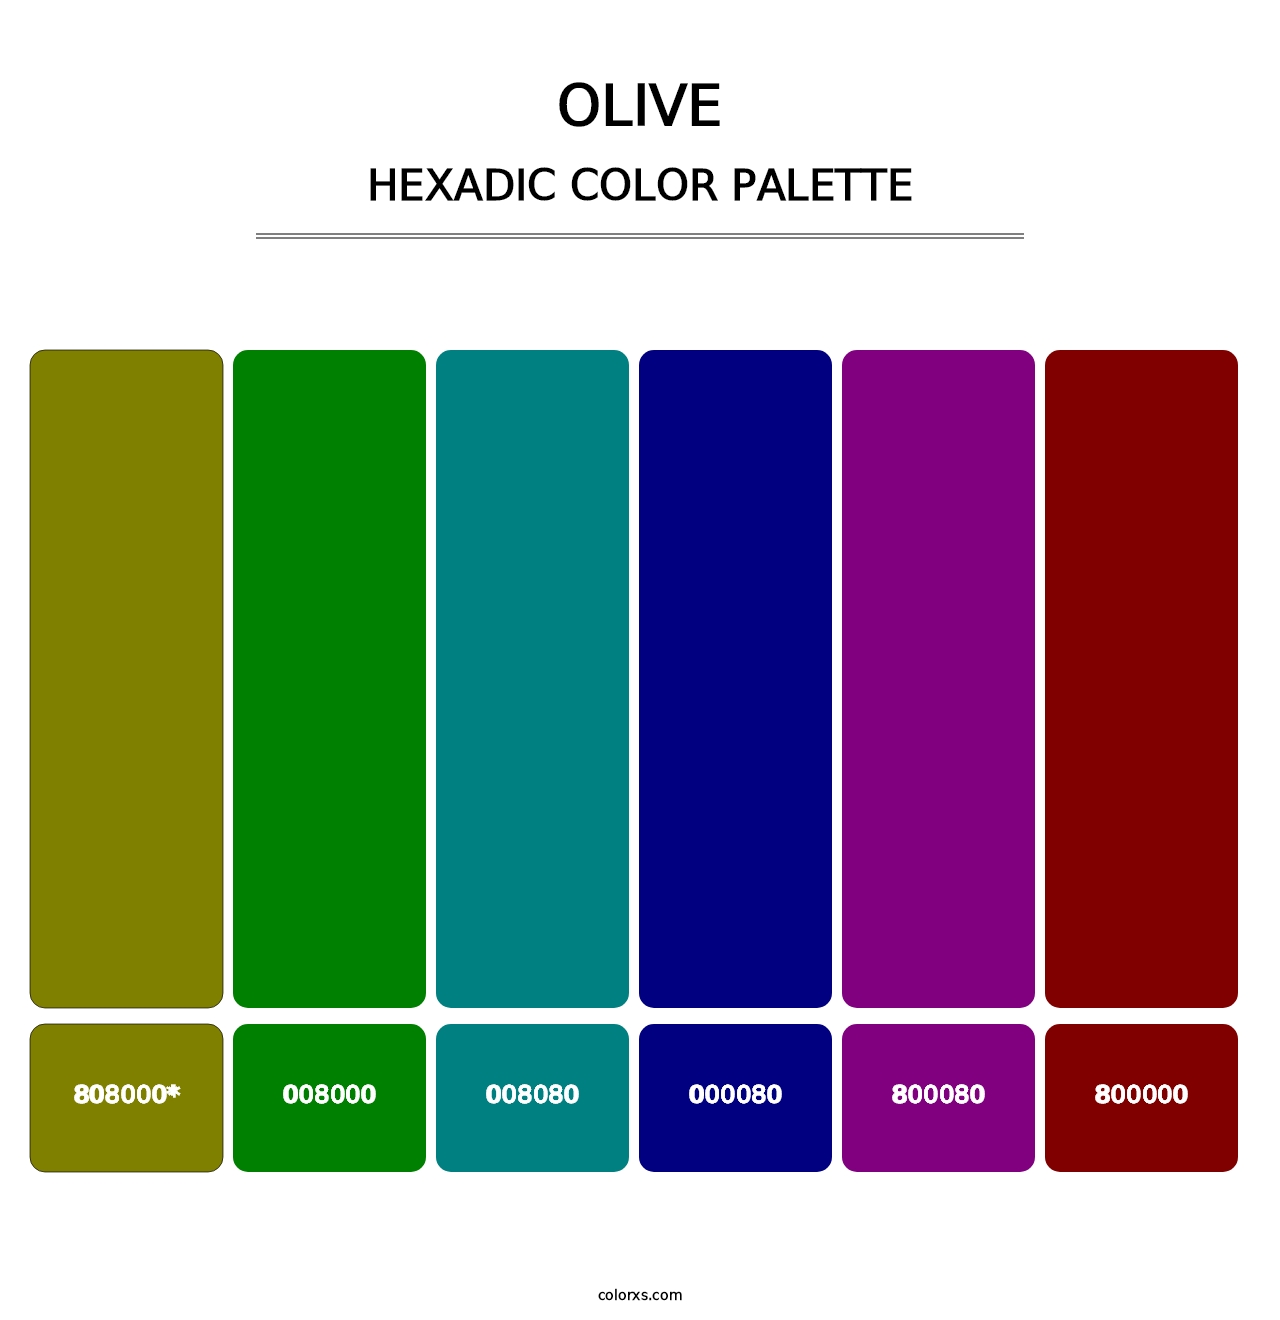 Olive - Hexadic Color Palette